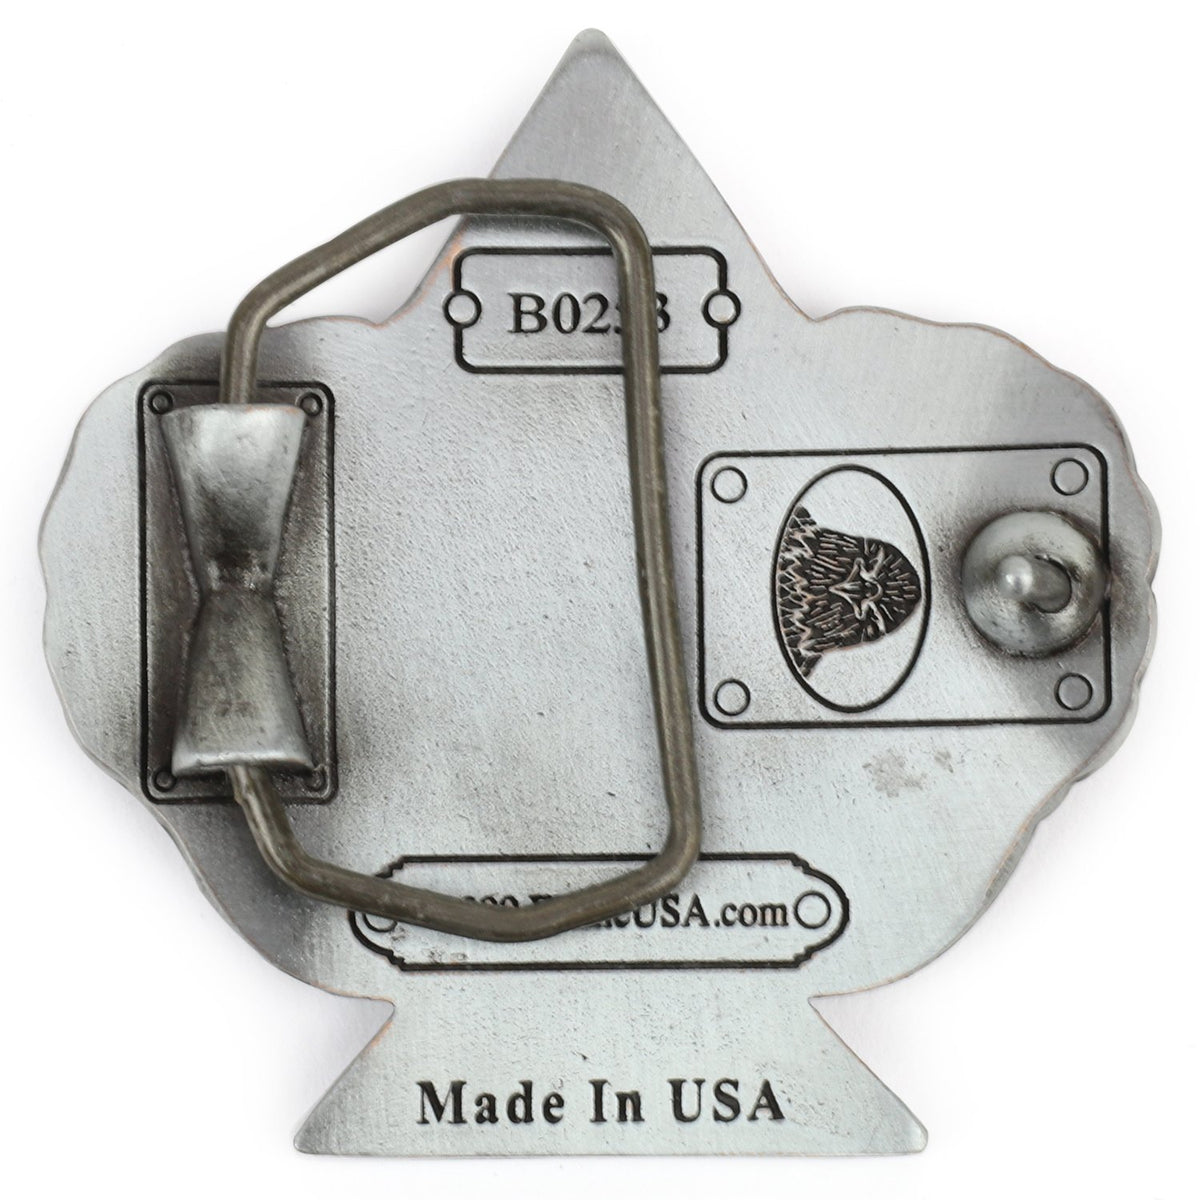 Armycrew Made in USA Death Spade Skull Metal Belt Buckle